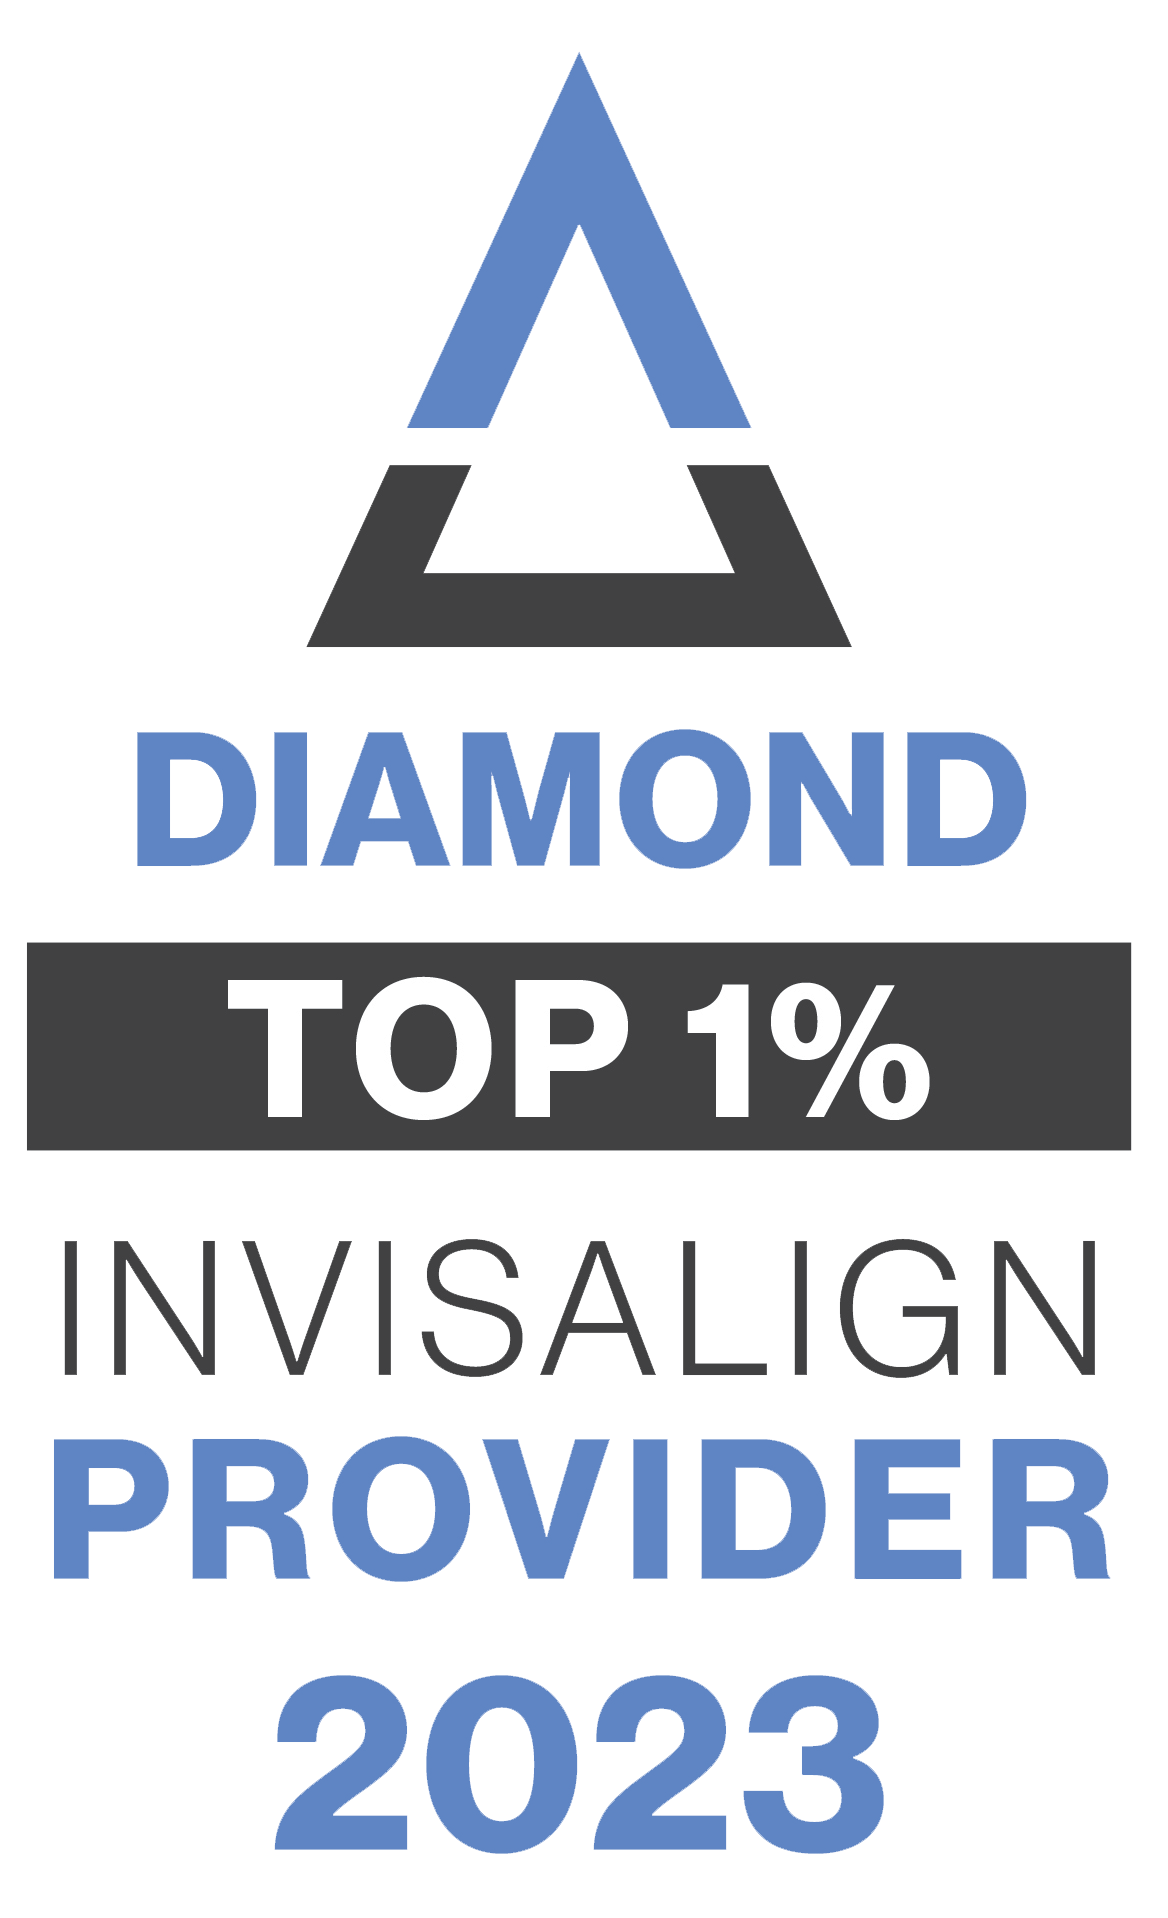 Diamond Provider!